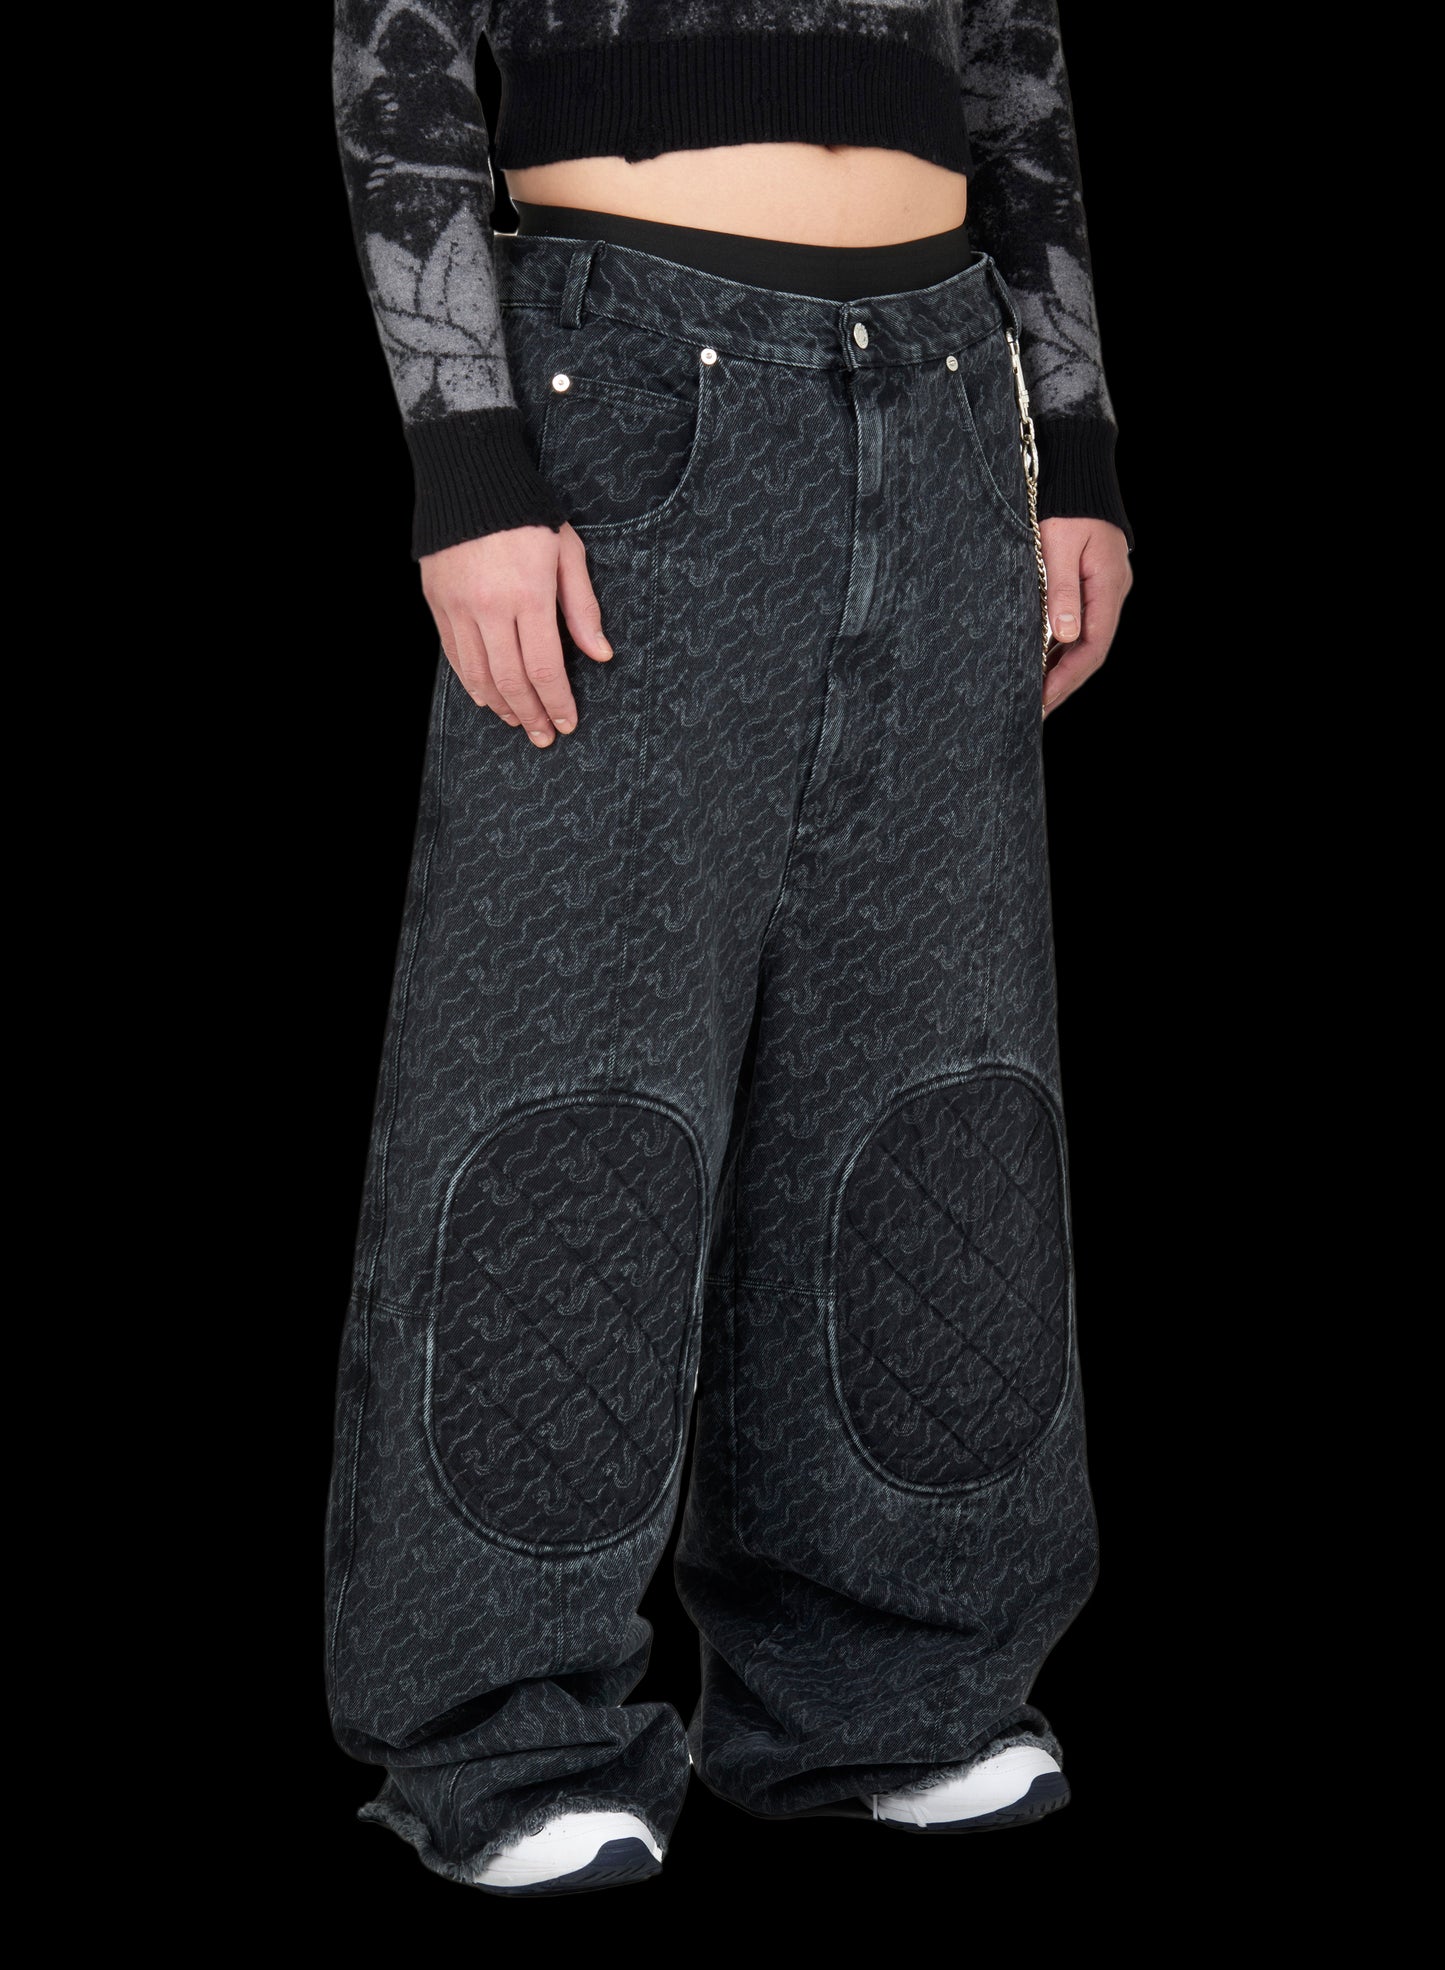 LU'U Dan | H.Lorenzo|Knee Patch Jeans (MP037D-WD-GRAPHITE-BLACK), 34 / Black